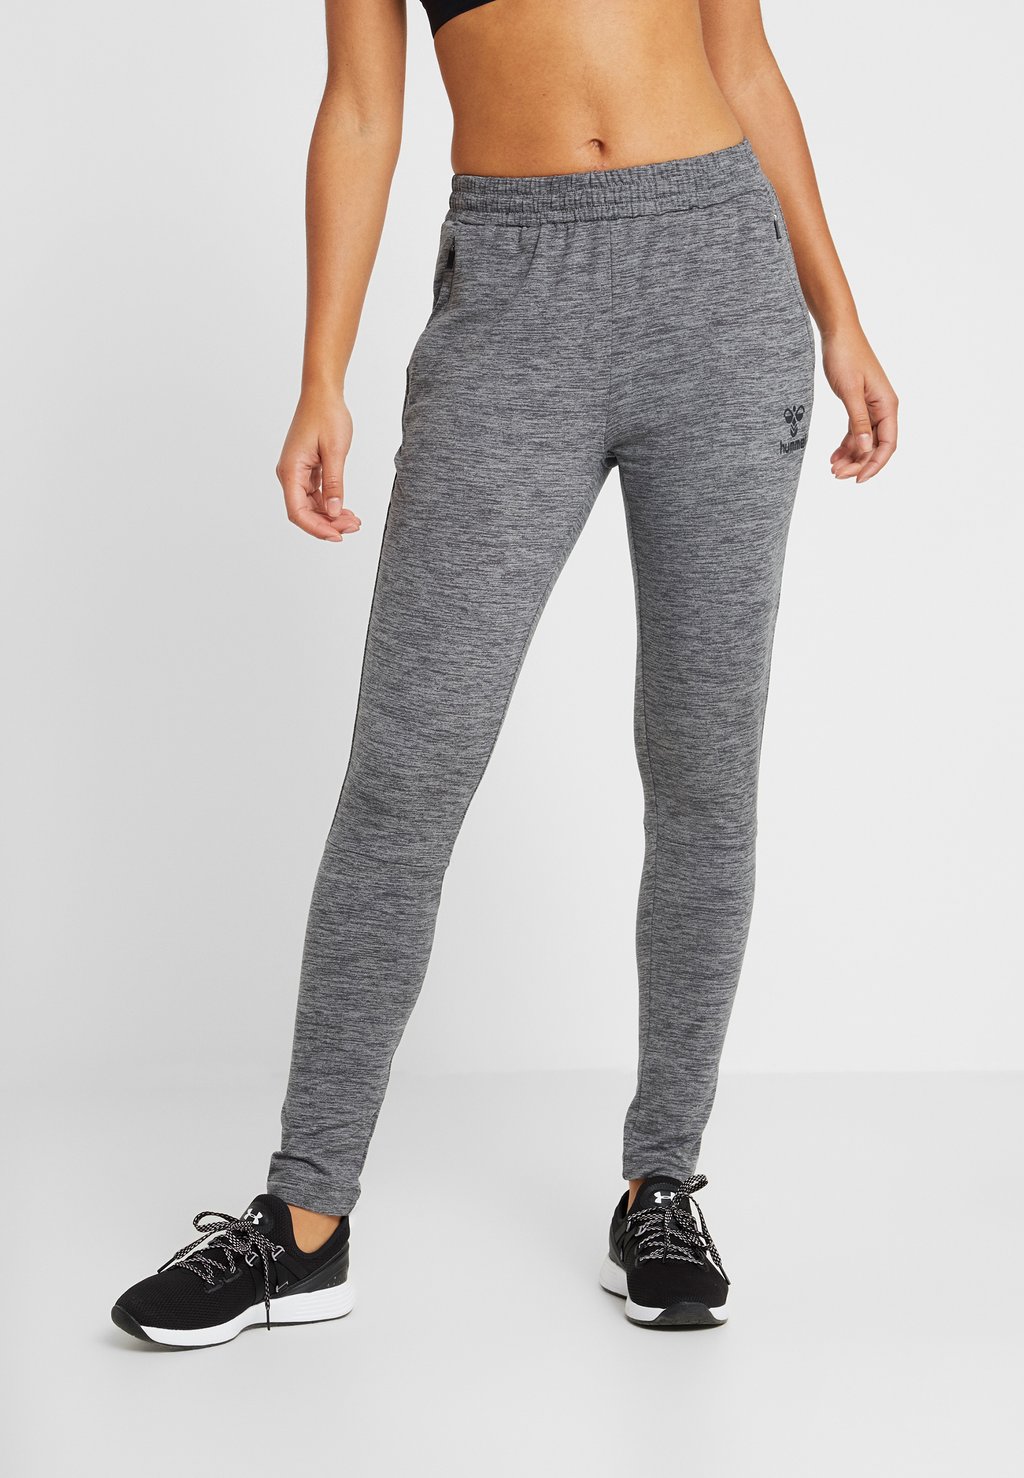 Спортивные брюки Hummel, темно-серый меланж спортивные брюки ombre серый меланж